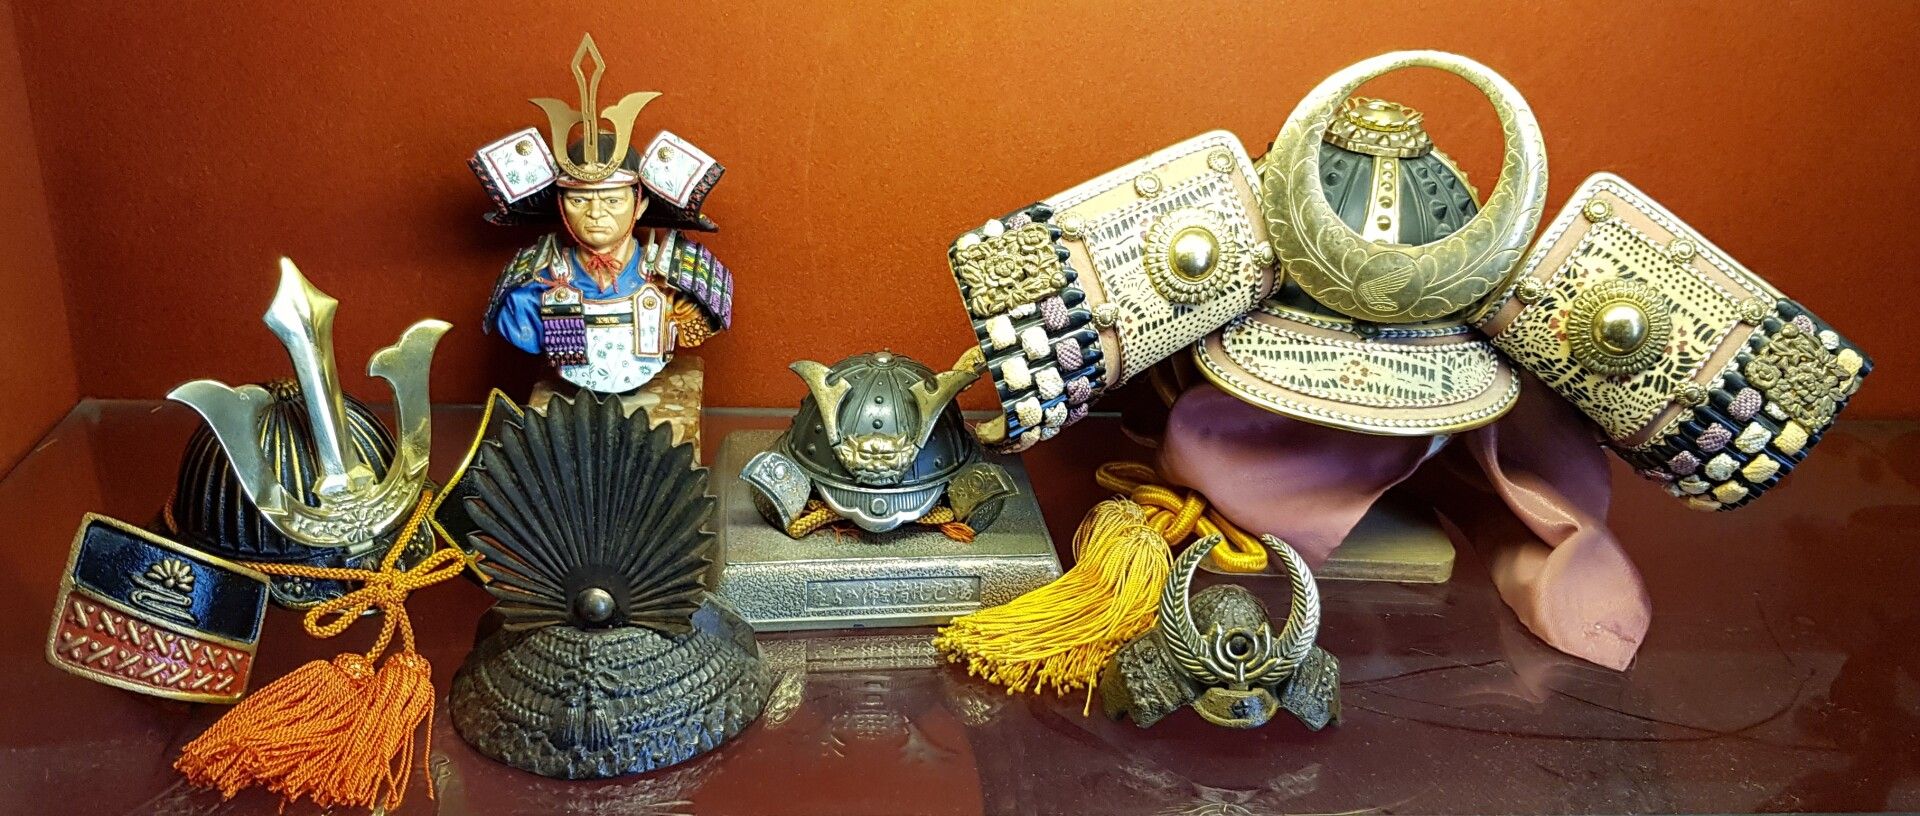 Null Lot of metal figurines about samurai helmets, modern work